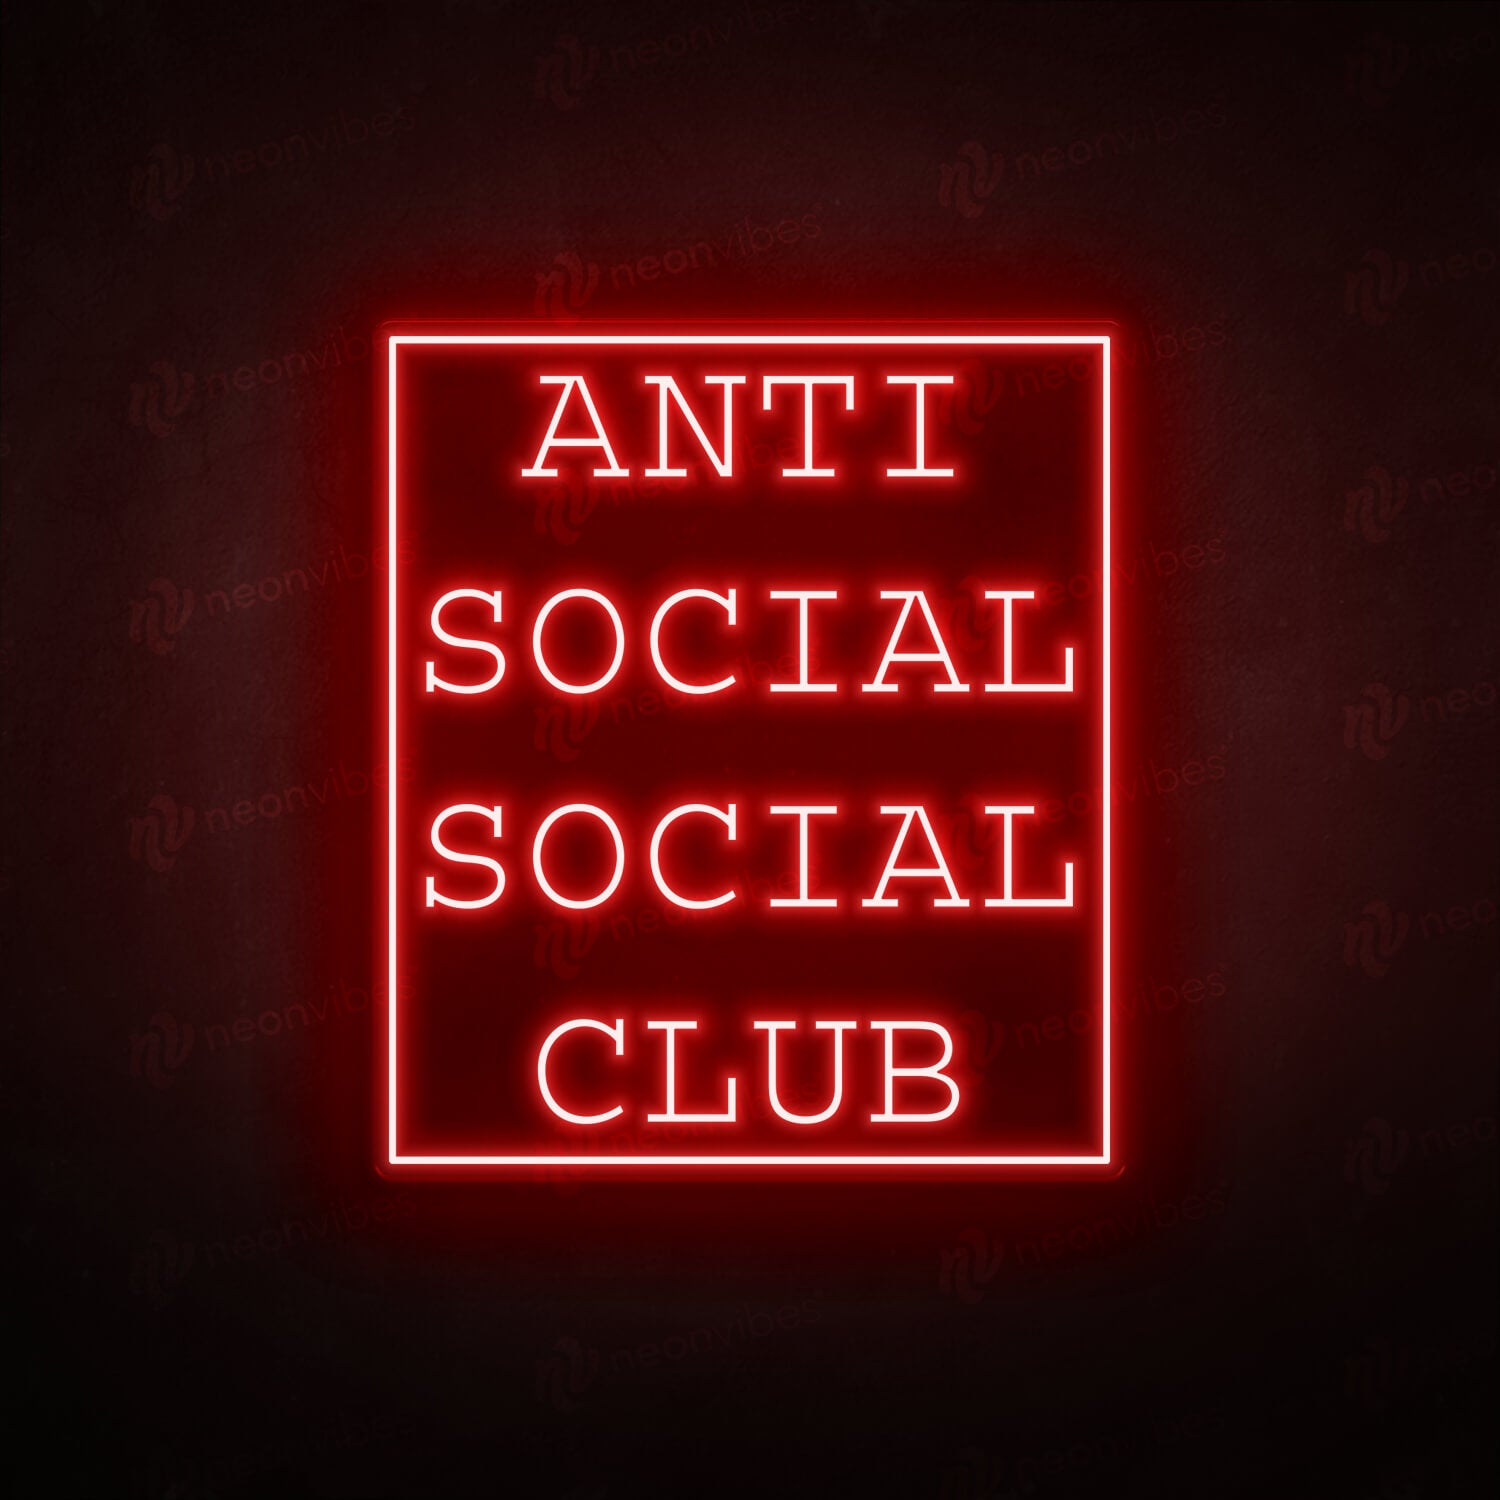 Anti Social Social club neon sign